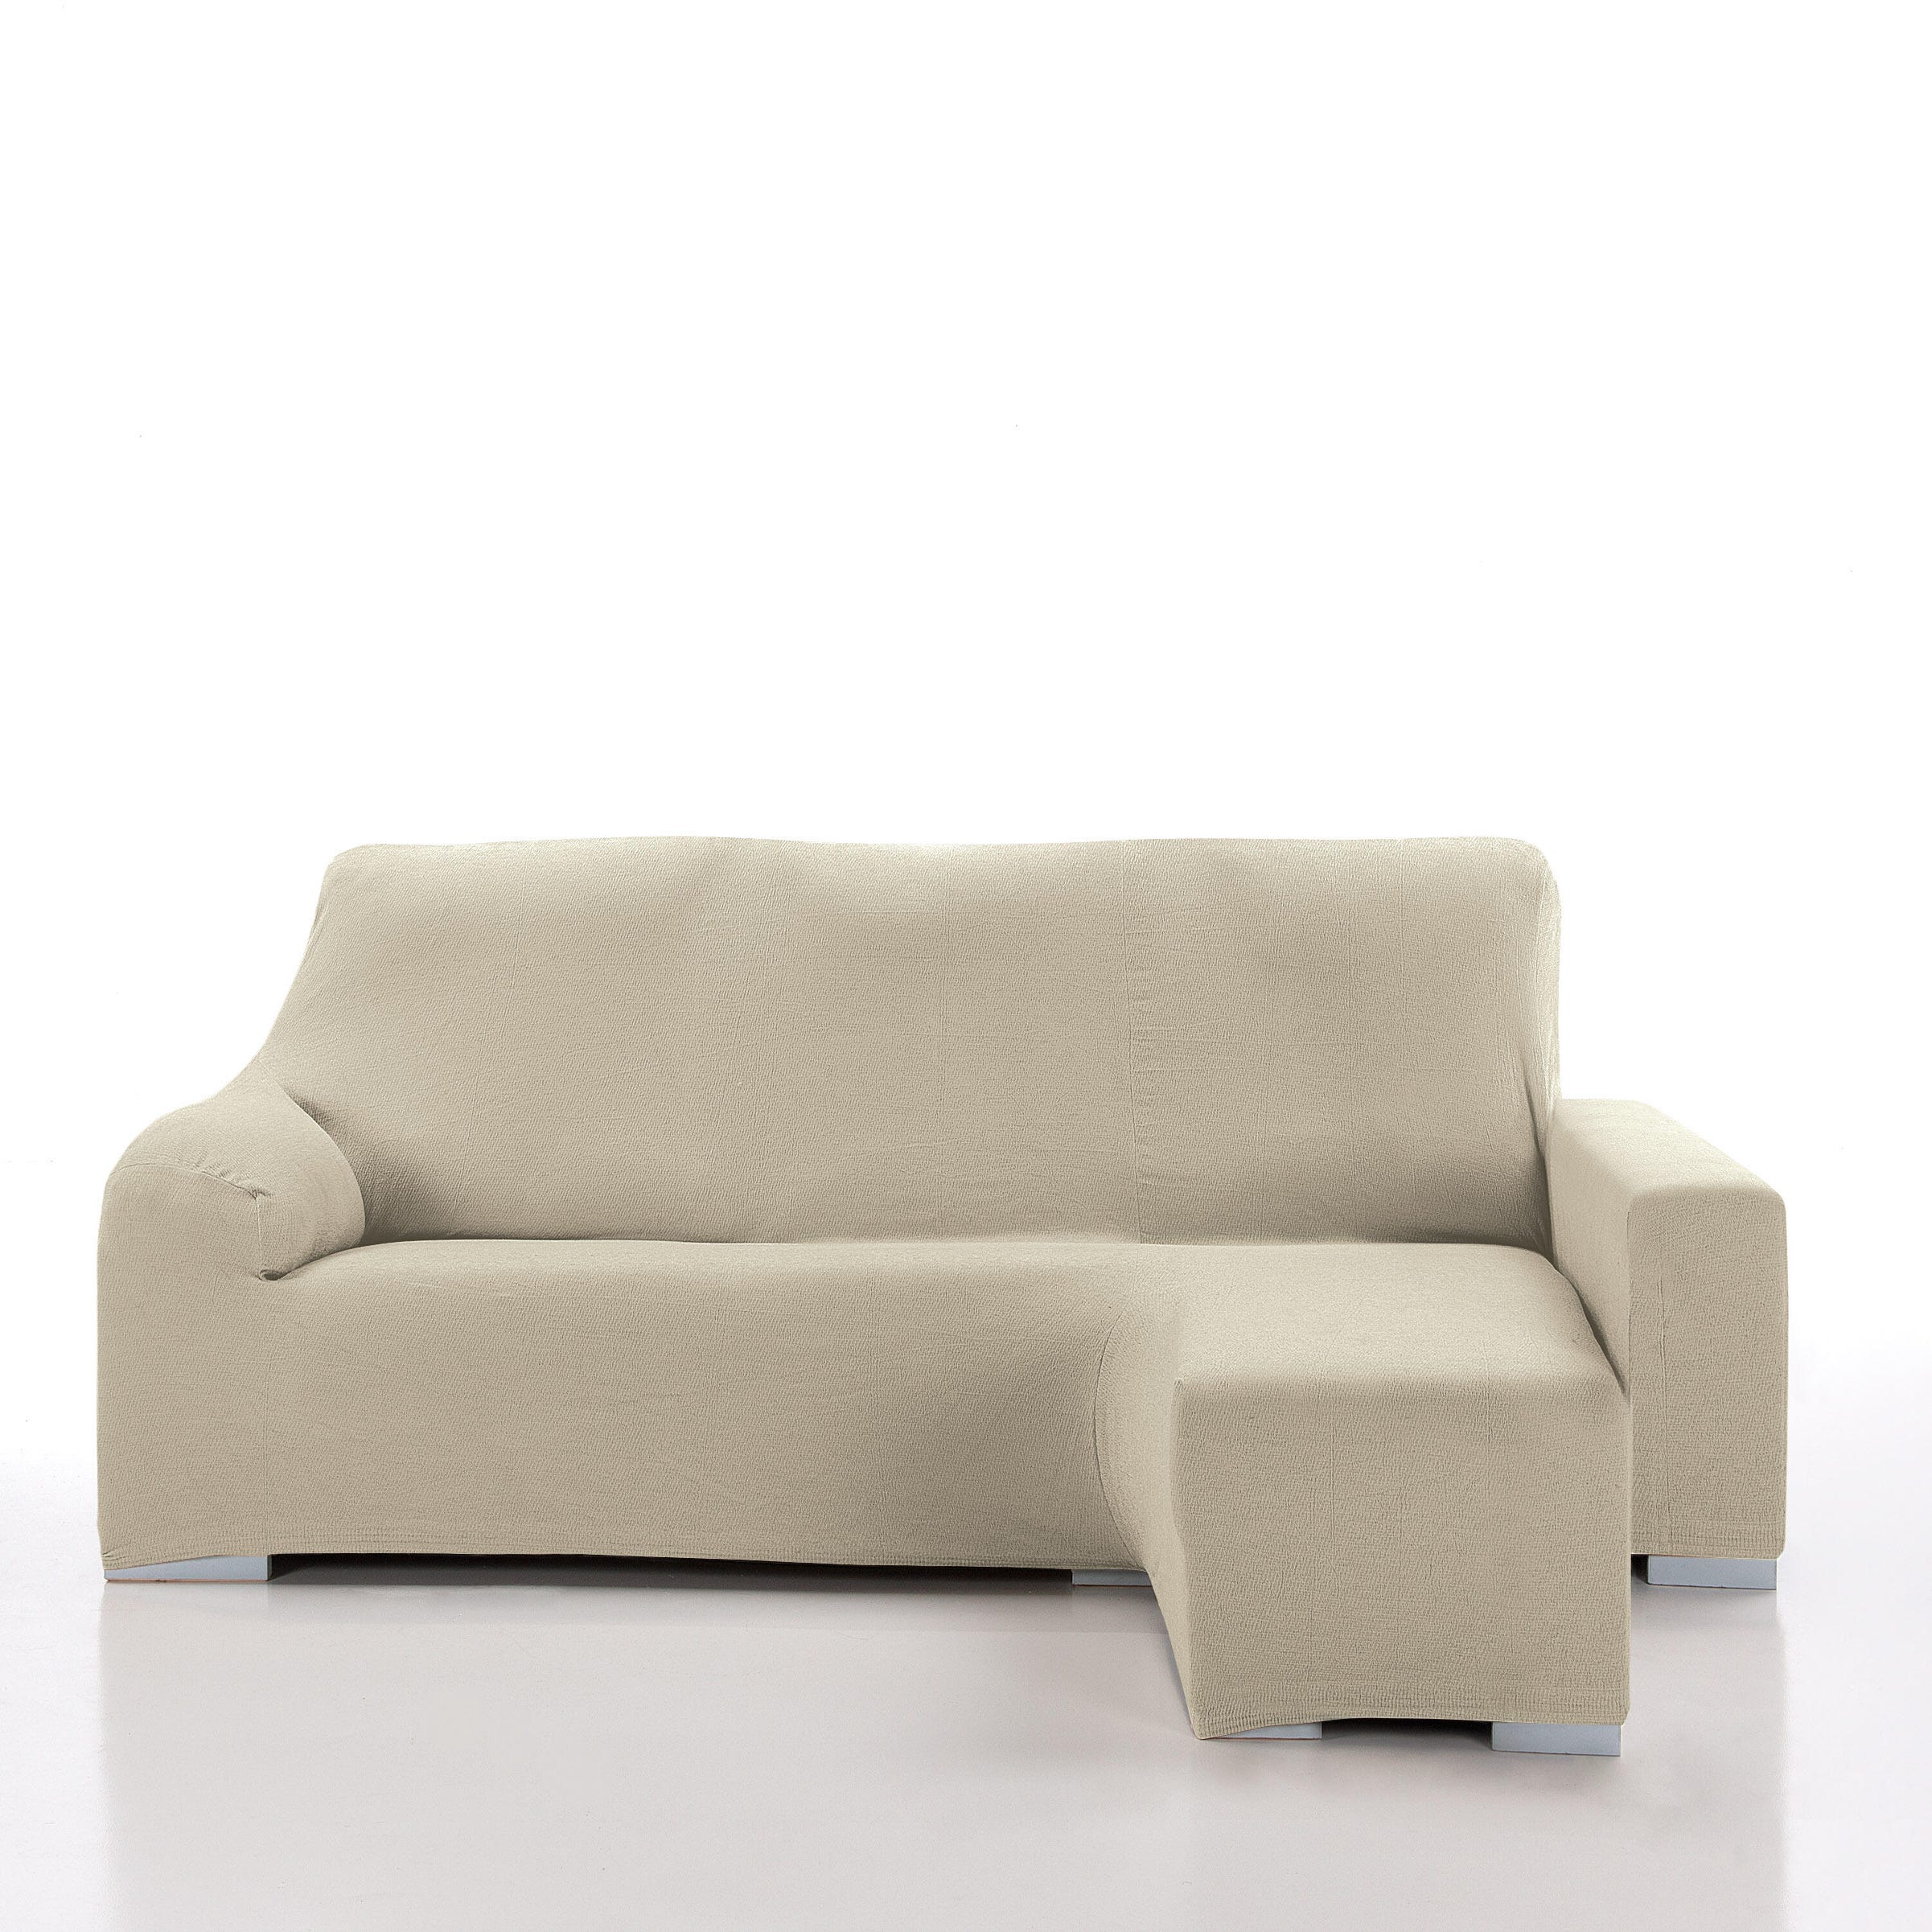 Funda para sofa chaise longue 290 cm brazo derecho - Leire - Color 02 Rosa